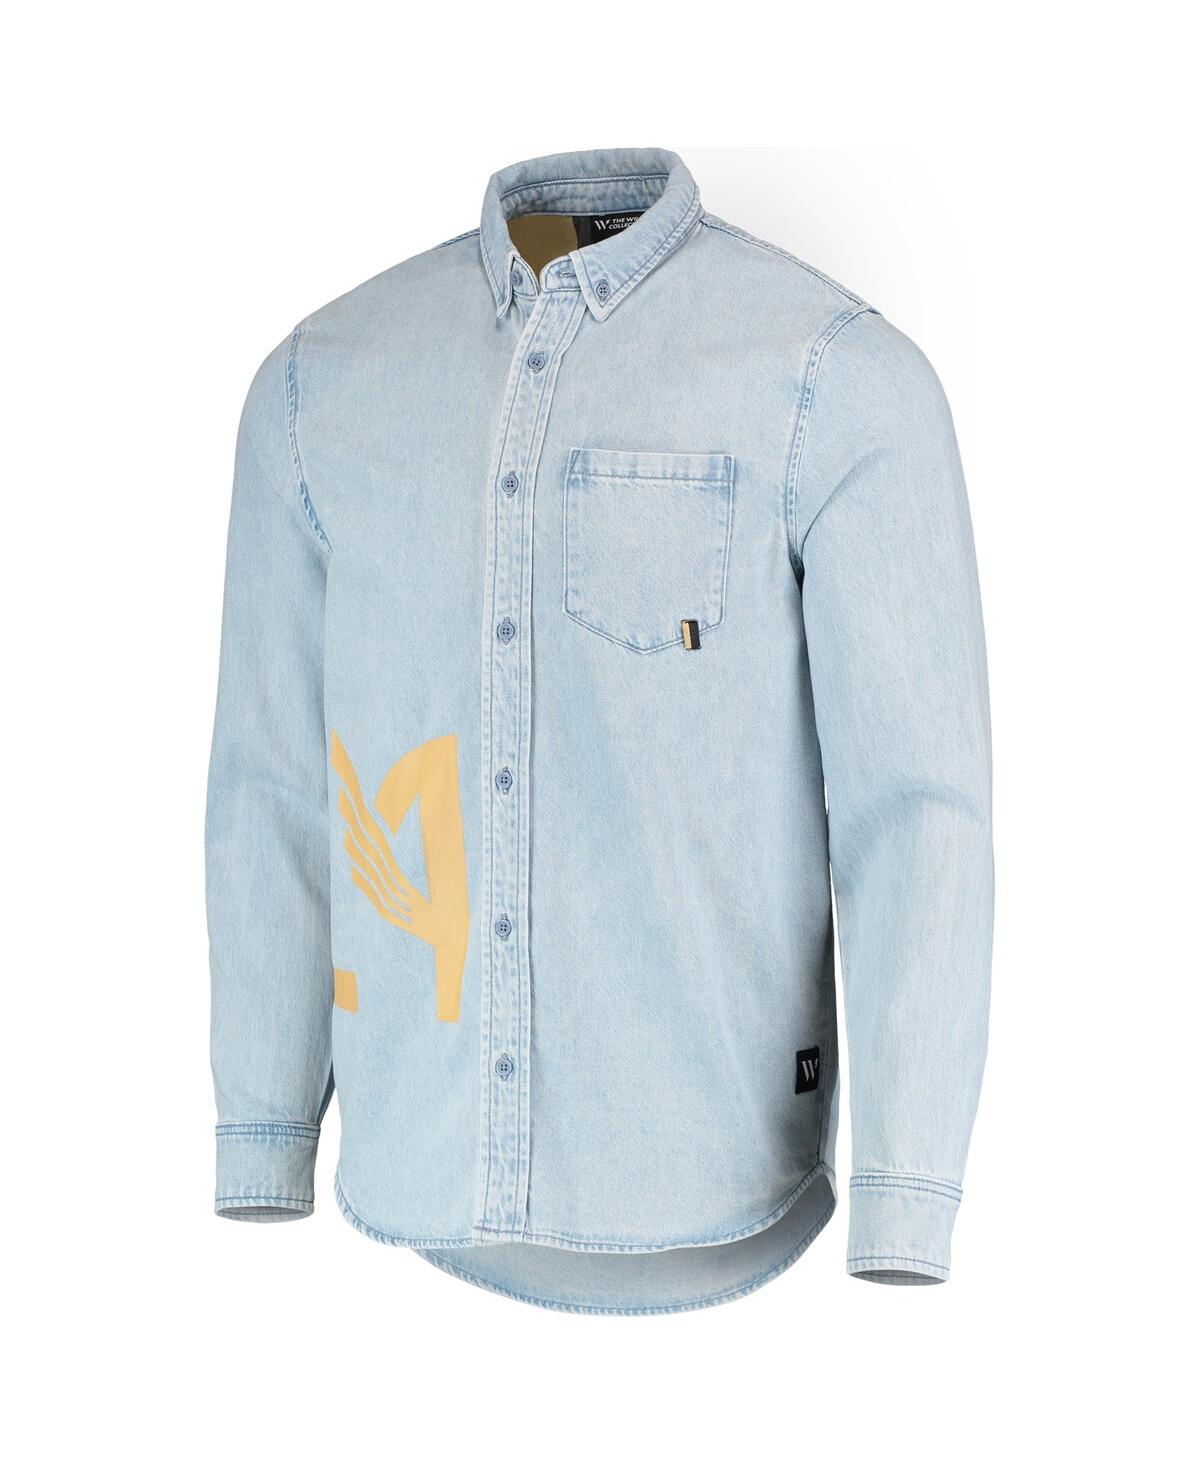 Shop The Wild Collective Men's  Blue Lafc Denim Button-down Long Sleeve Shirt